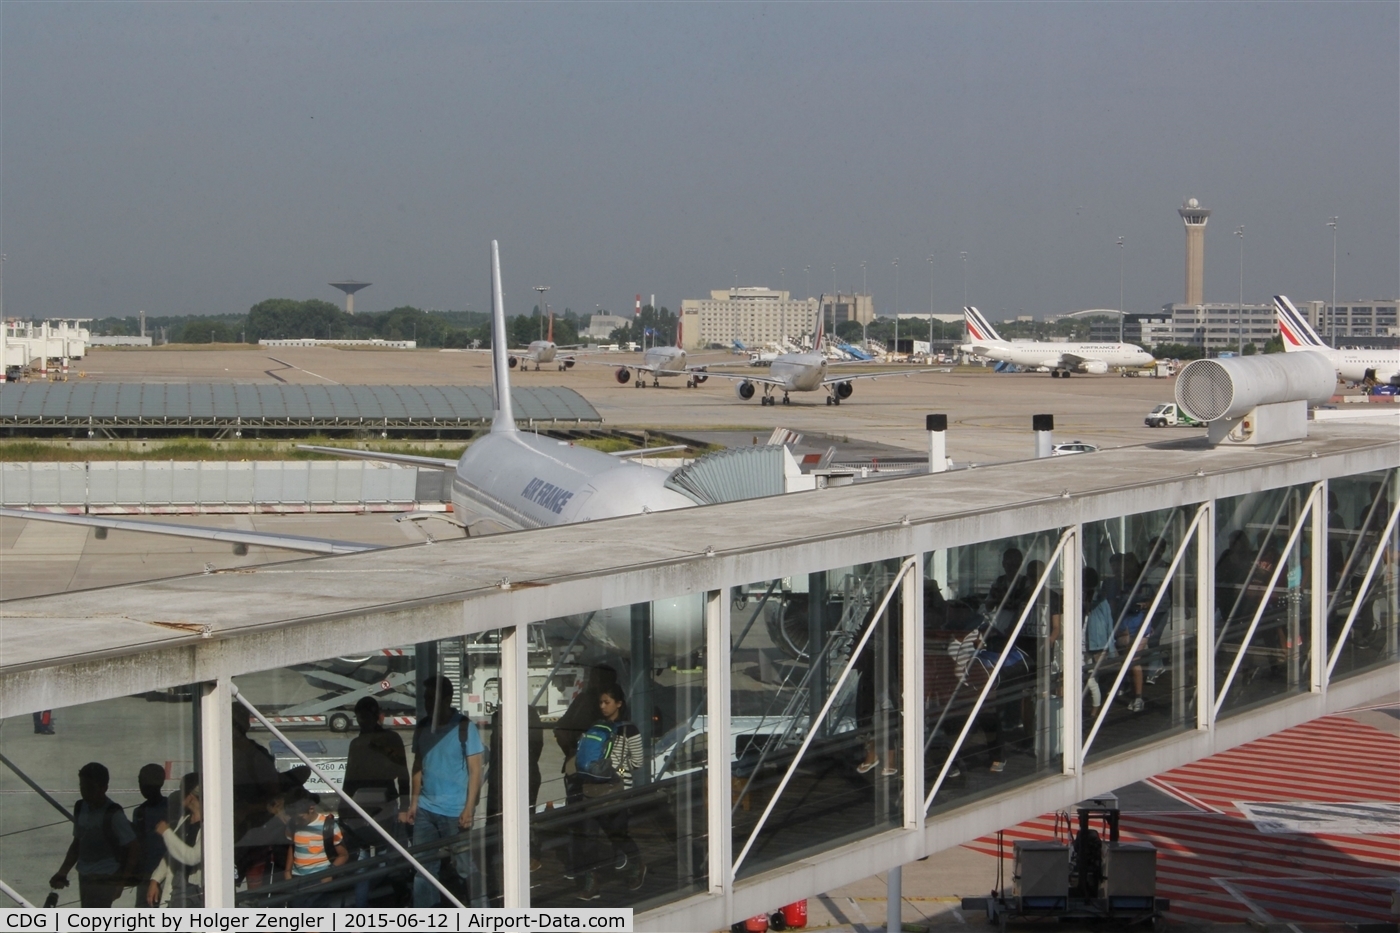 Paris Charles de Gaulle Airport (Roissy Airport), Paris France (CDG) - At terminal 2...